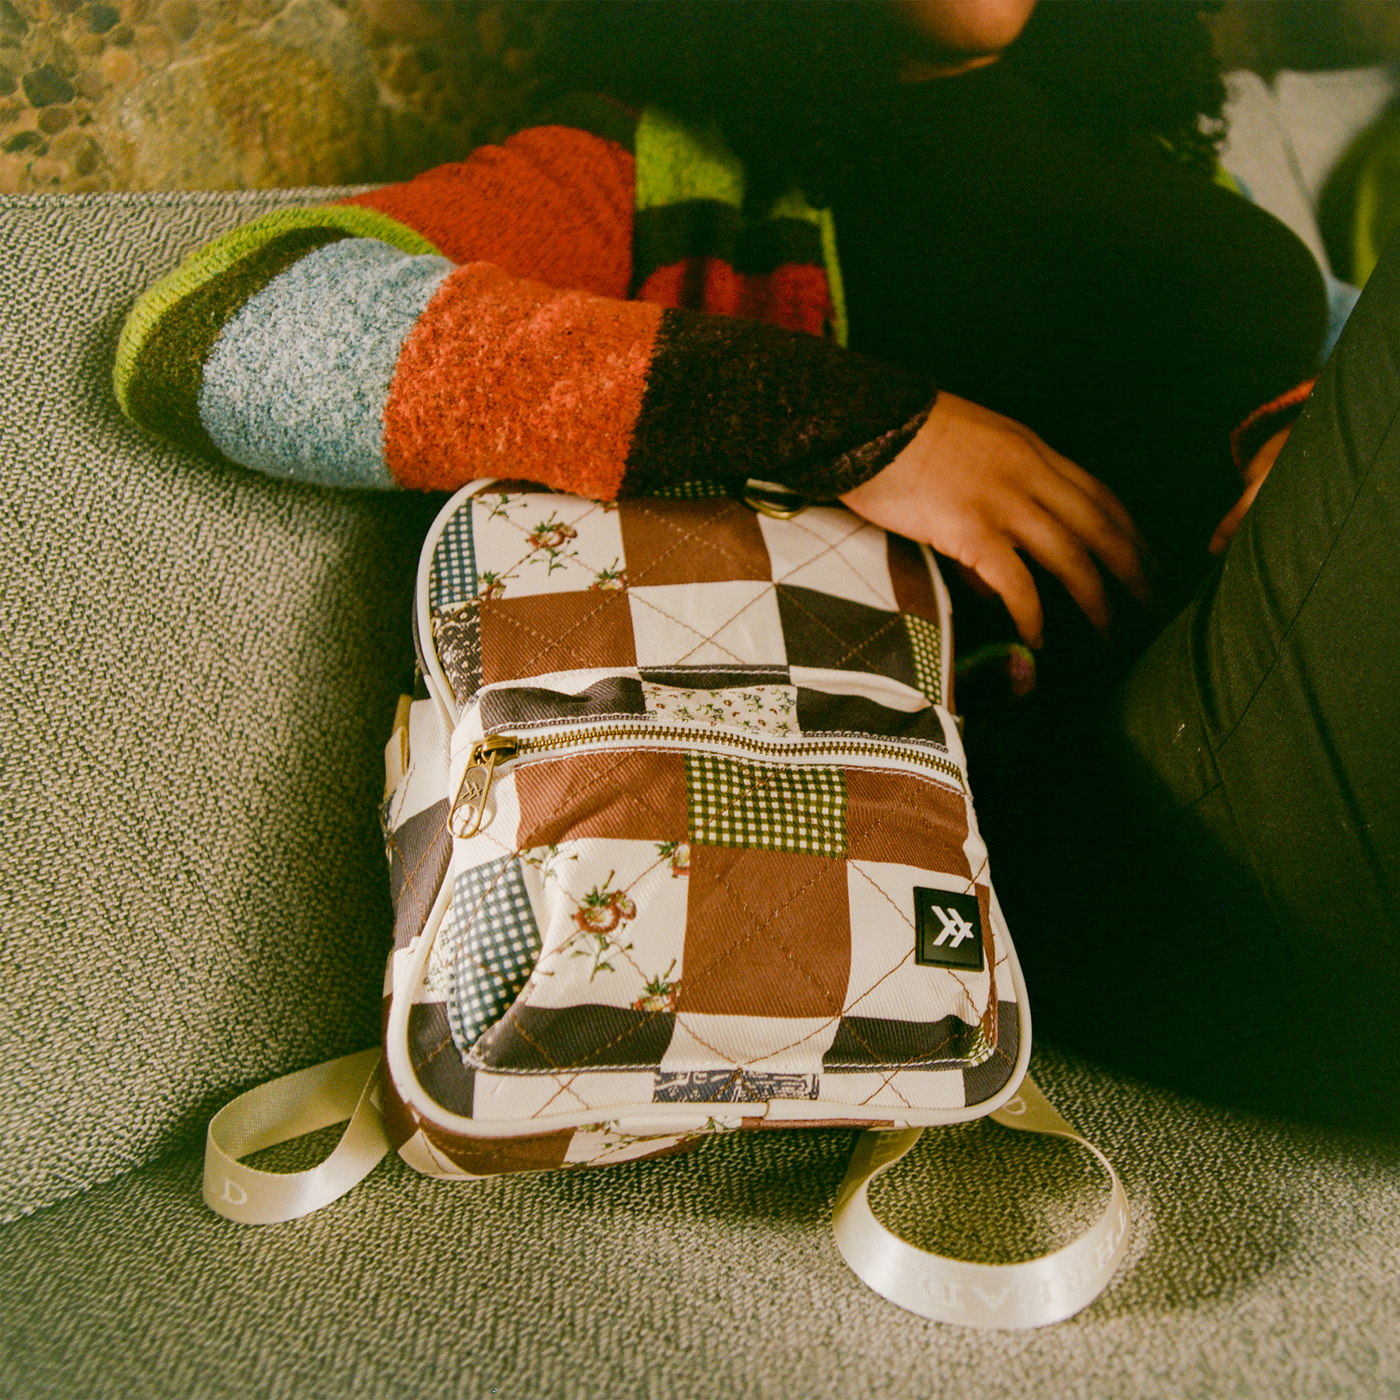 Mini Backpack - Montana - Thread®